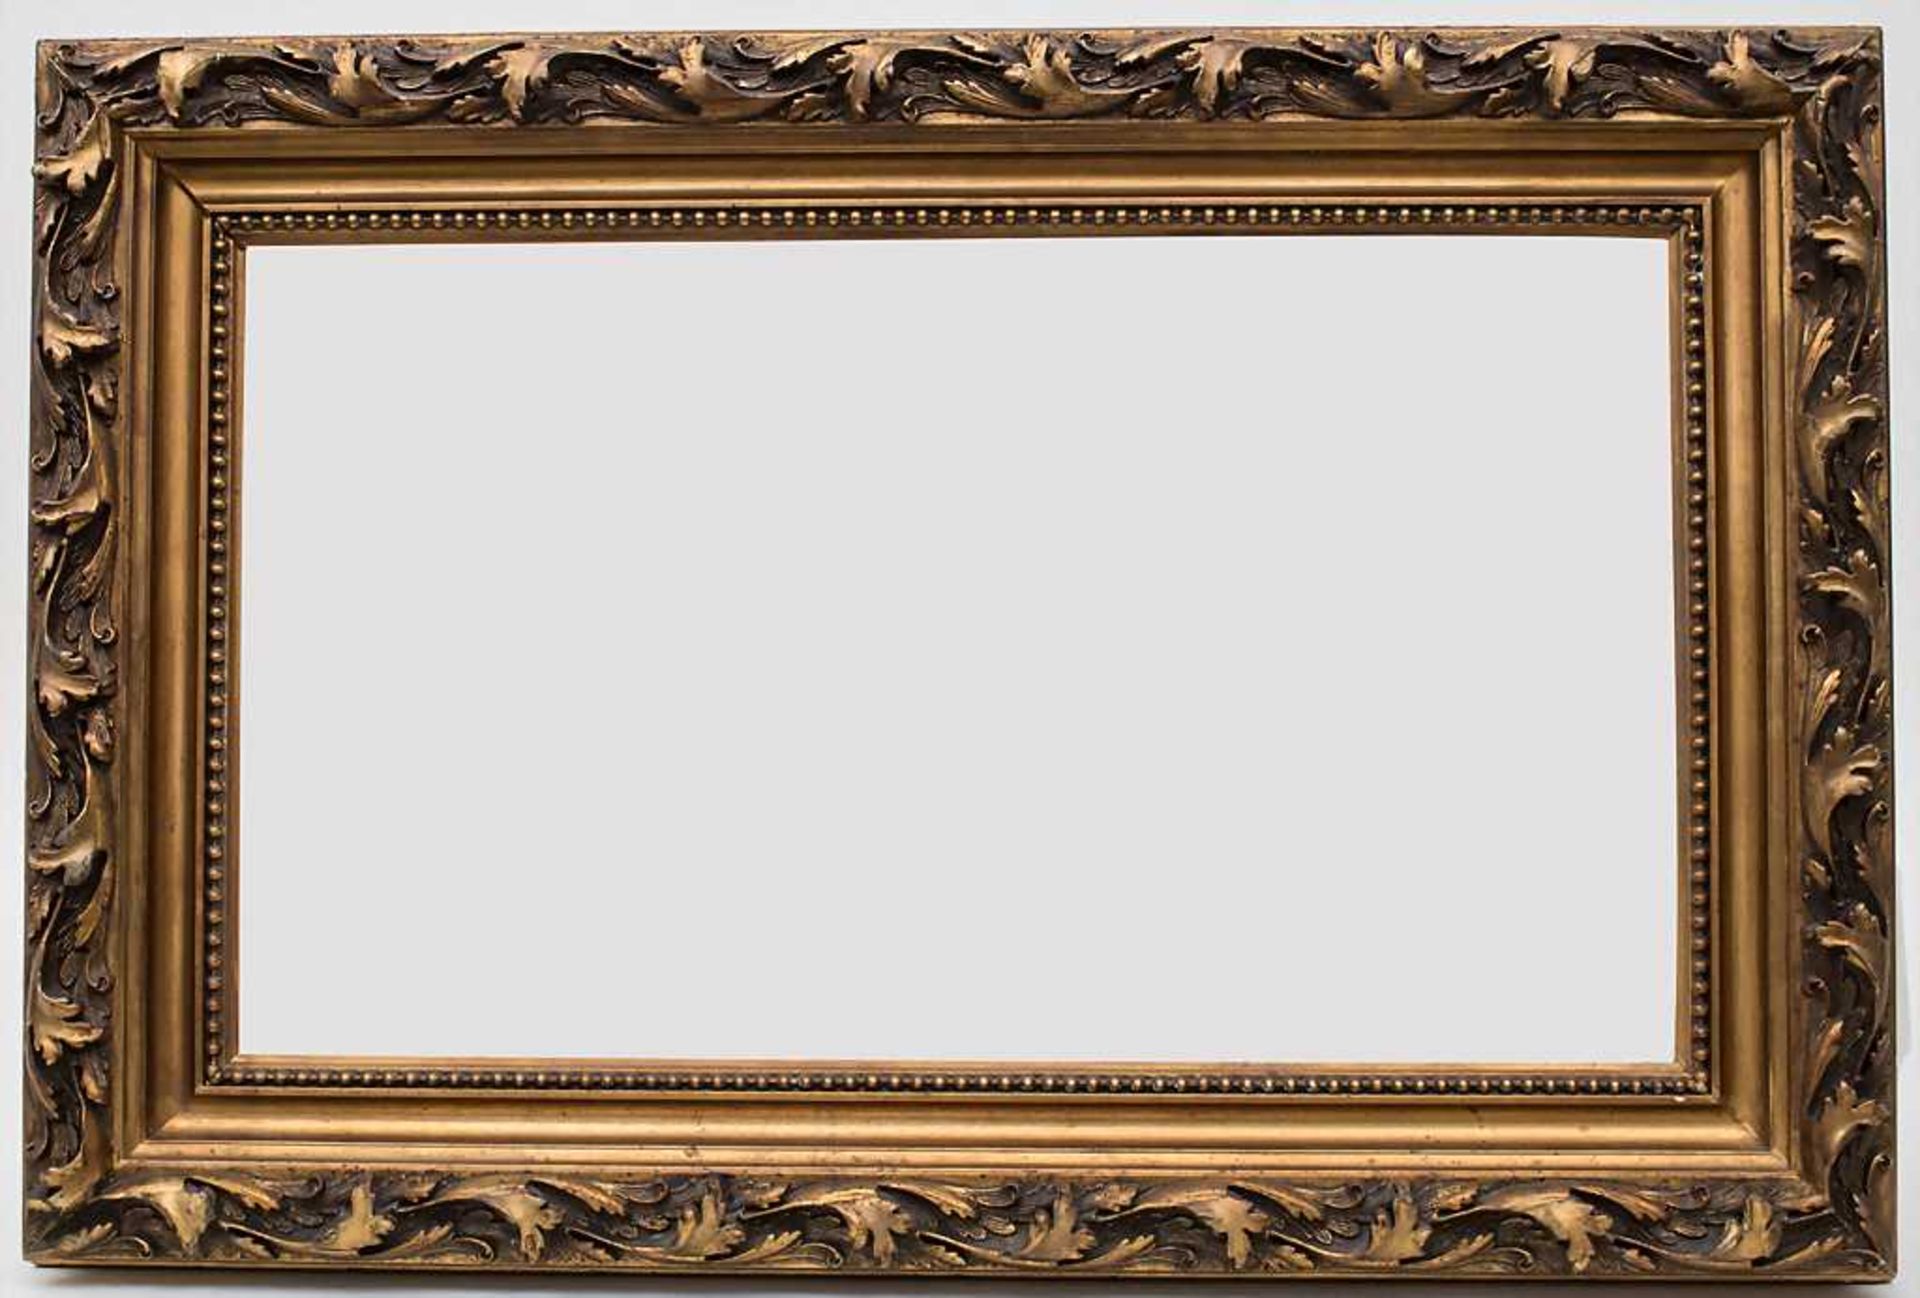 Bilderrahmen / Frame, frühes 20. Jh. Material: Holz, geschnitzt, vergoldet,Falzmaße: 35 x 60 cm,